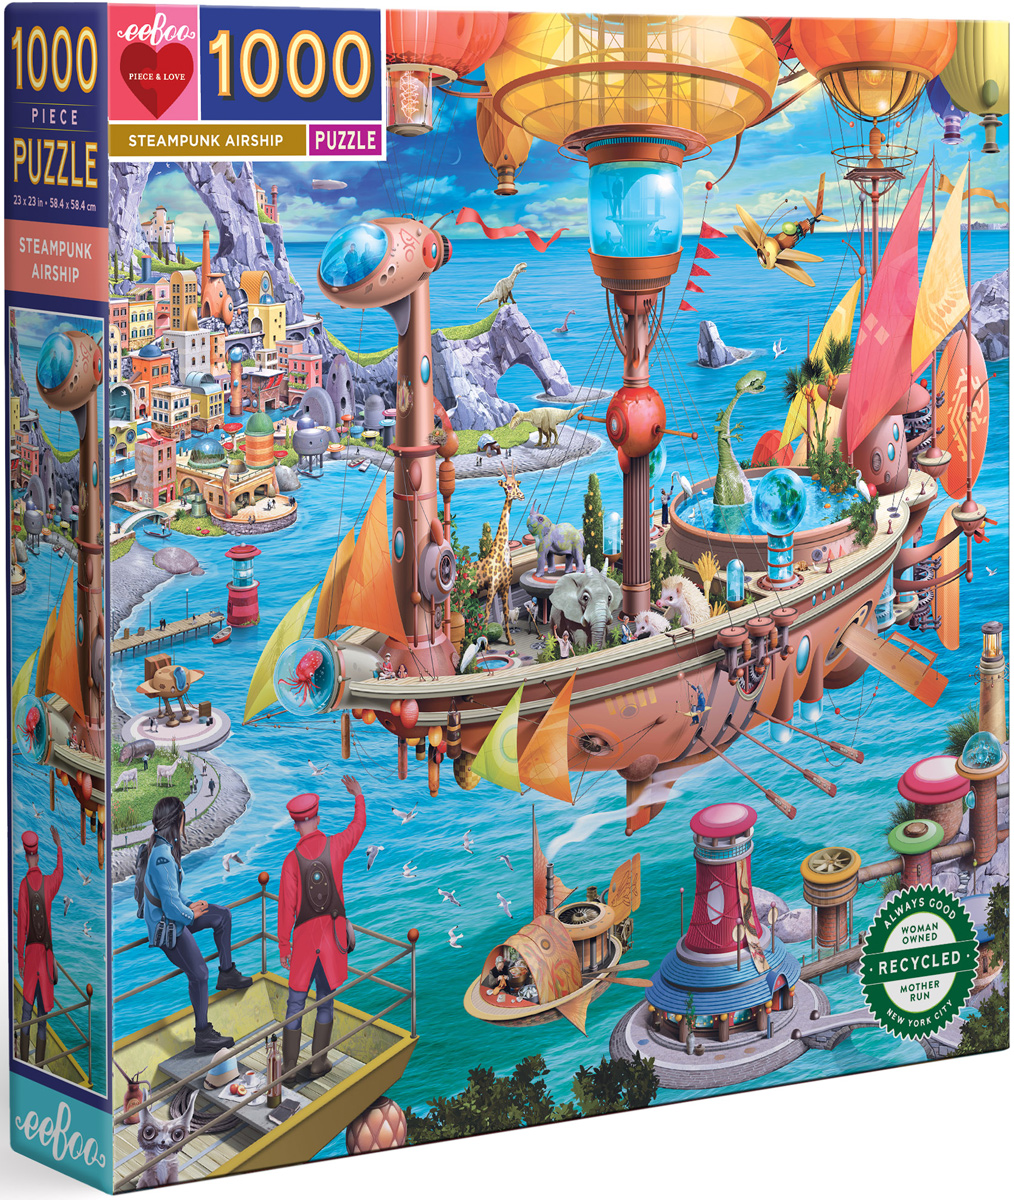 Steampunk Airship Fantasy Jigsaw Puzzle